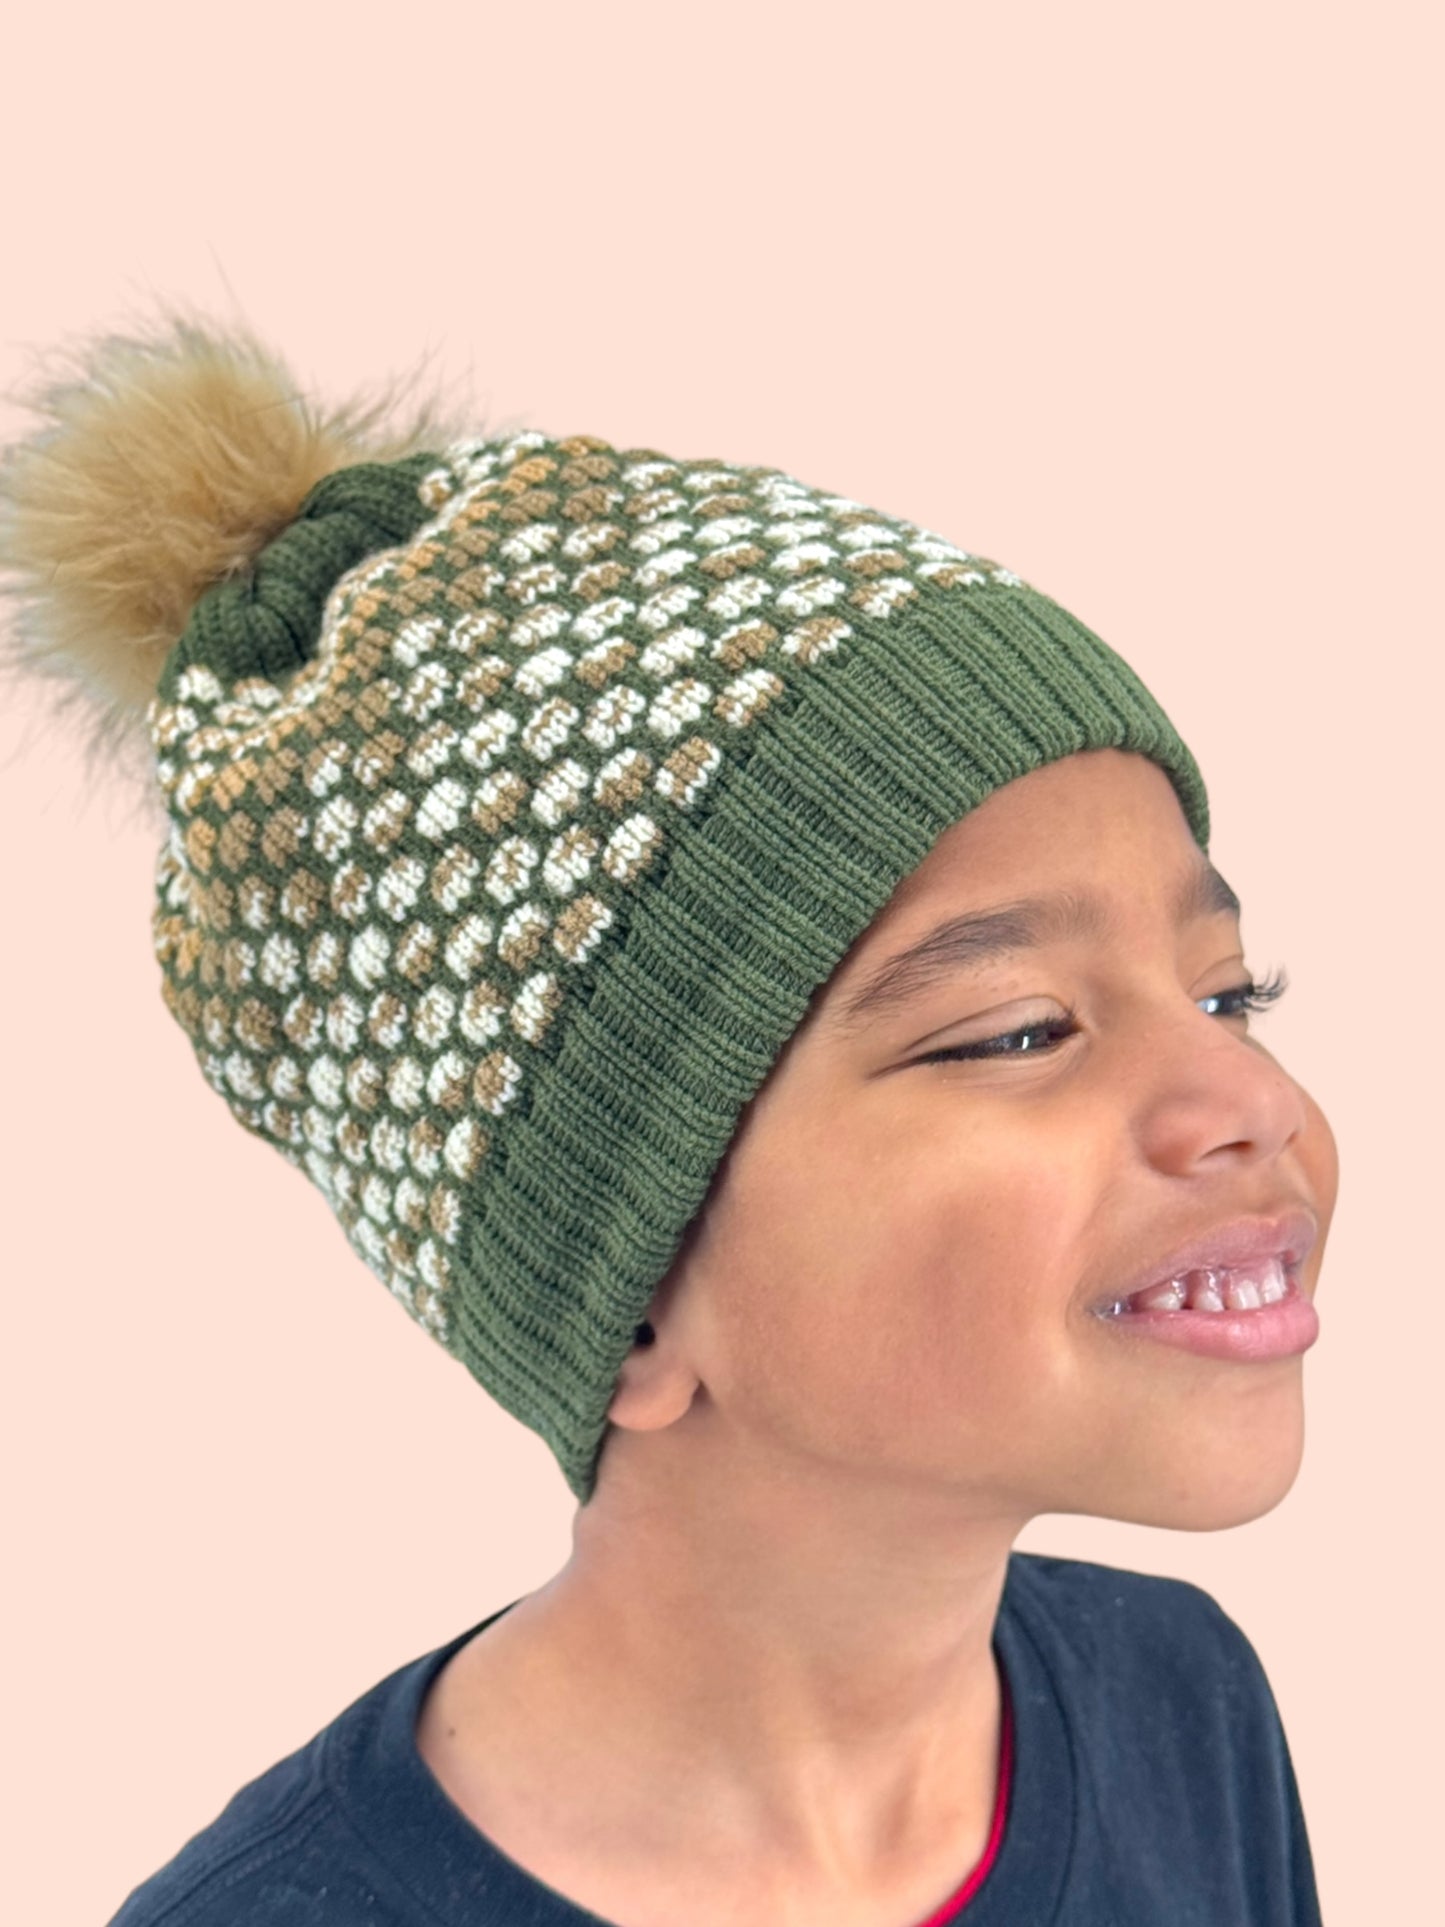 Kids knit hat